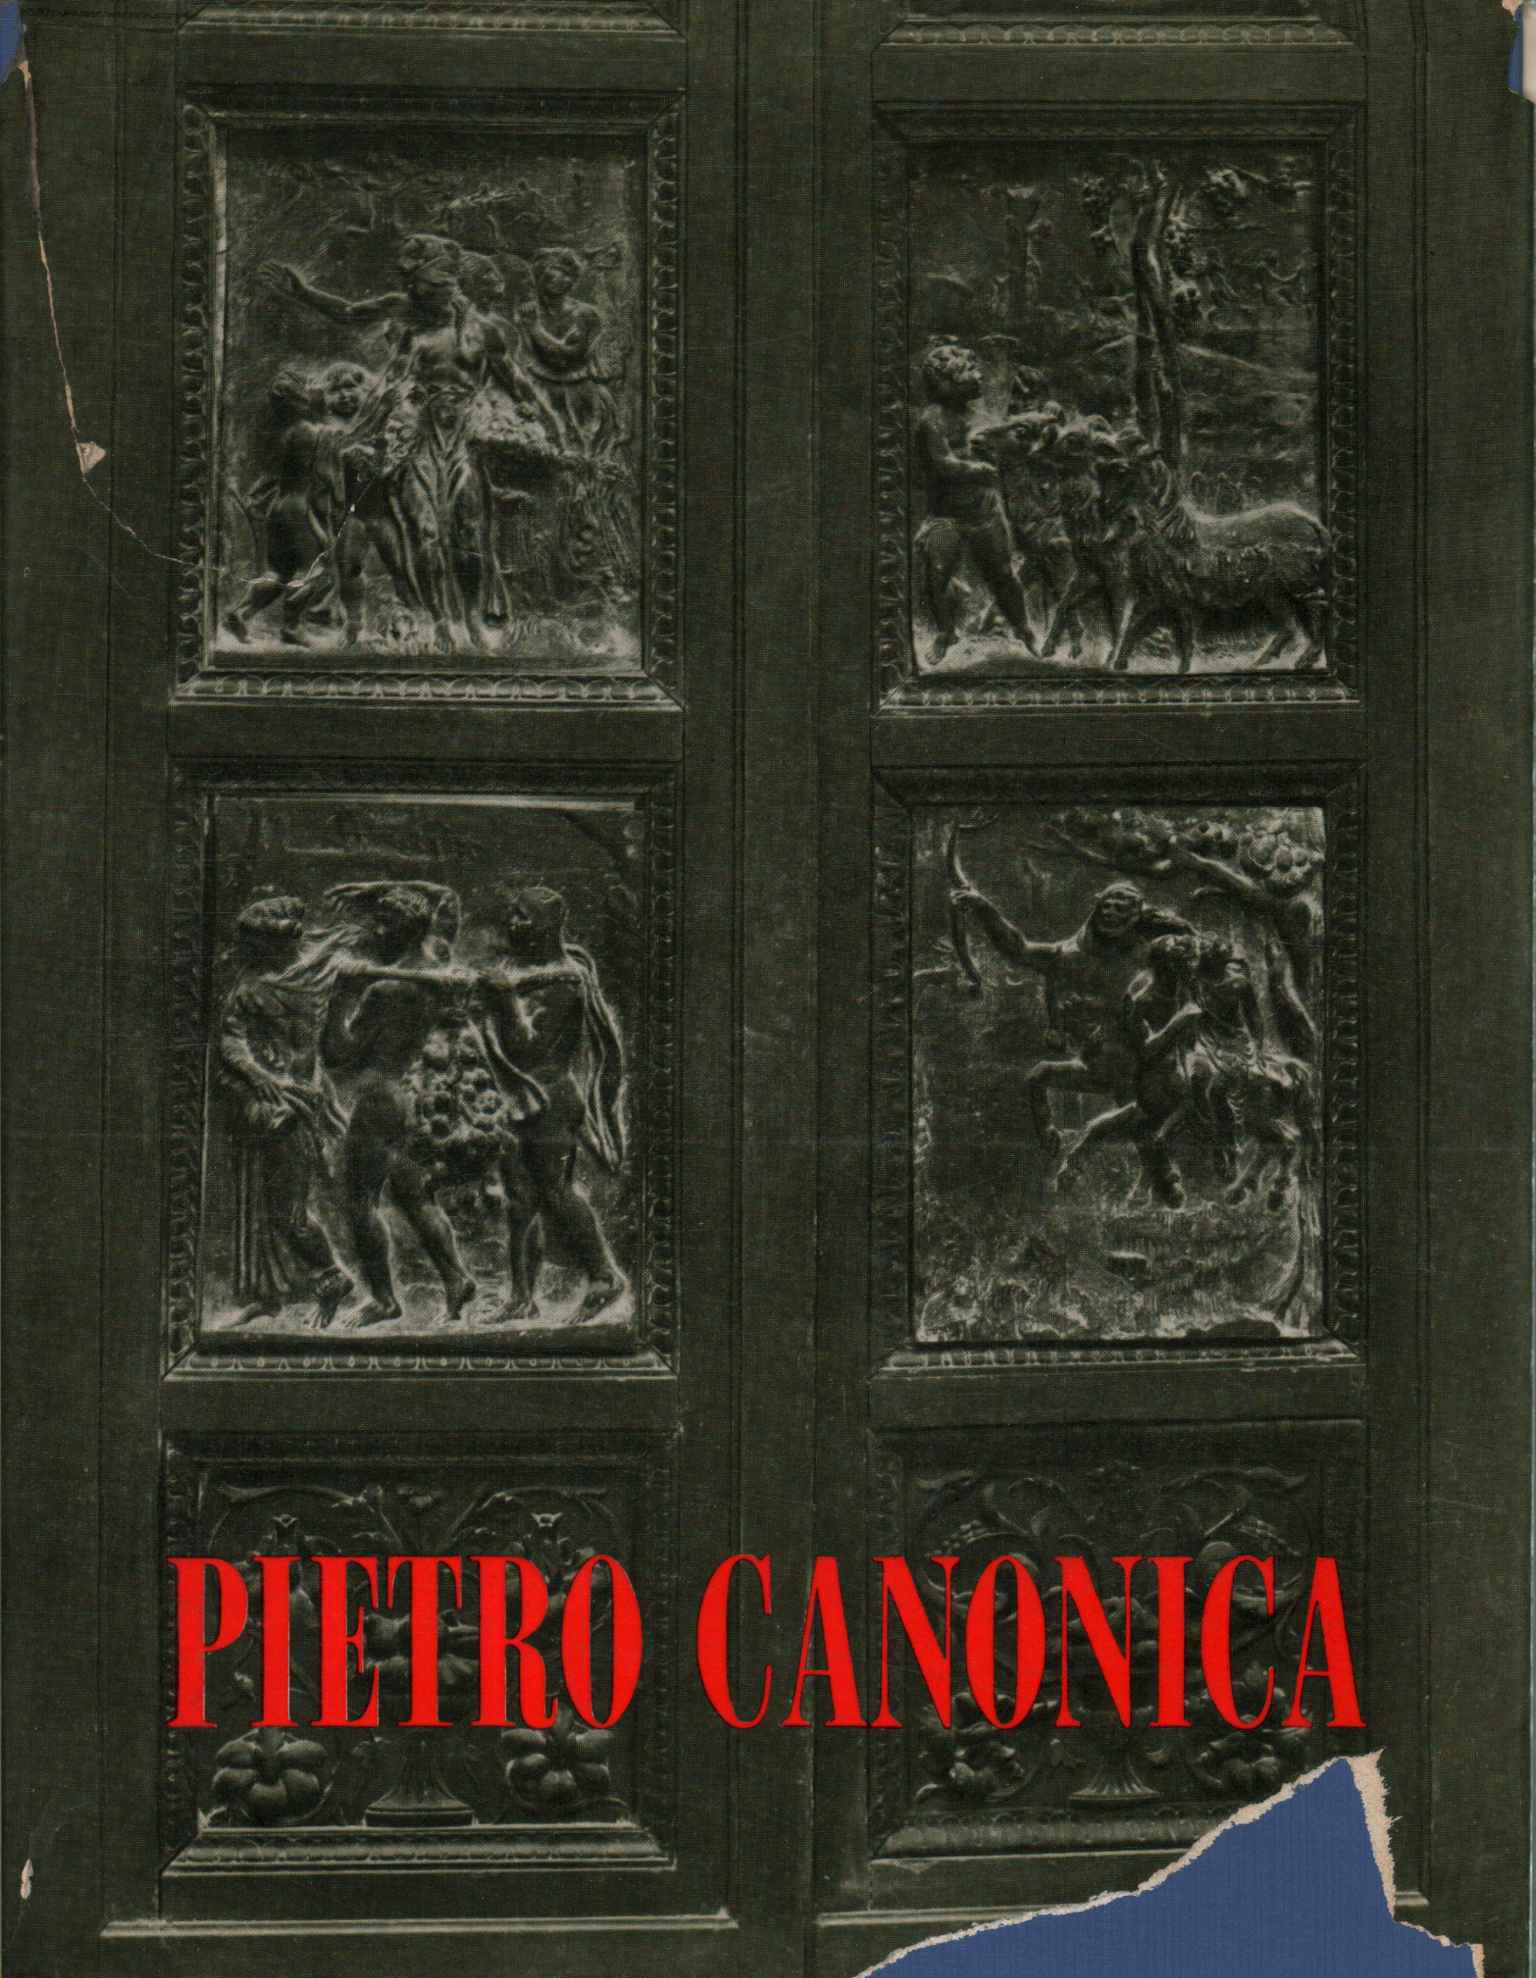 Pietro Canonica sculpteur